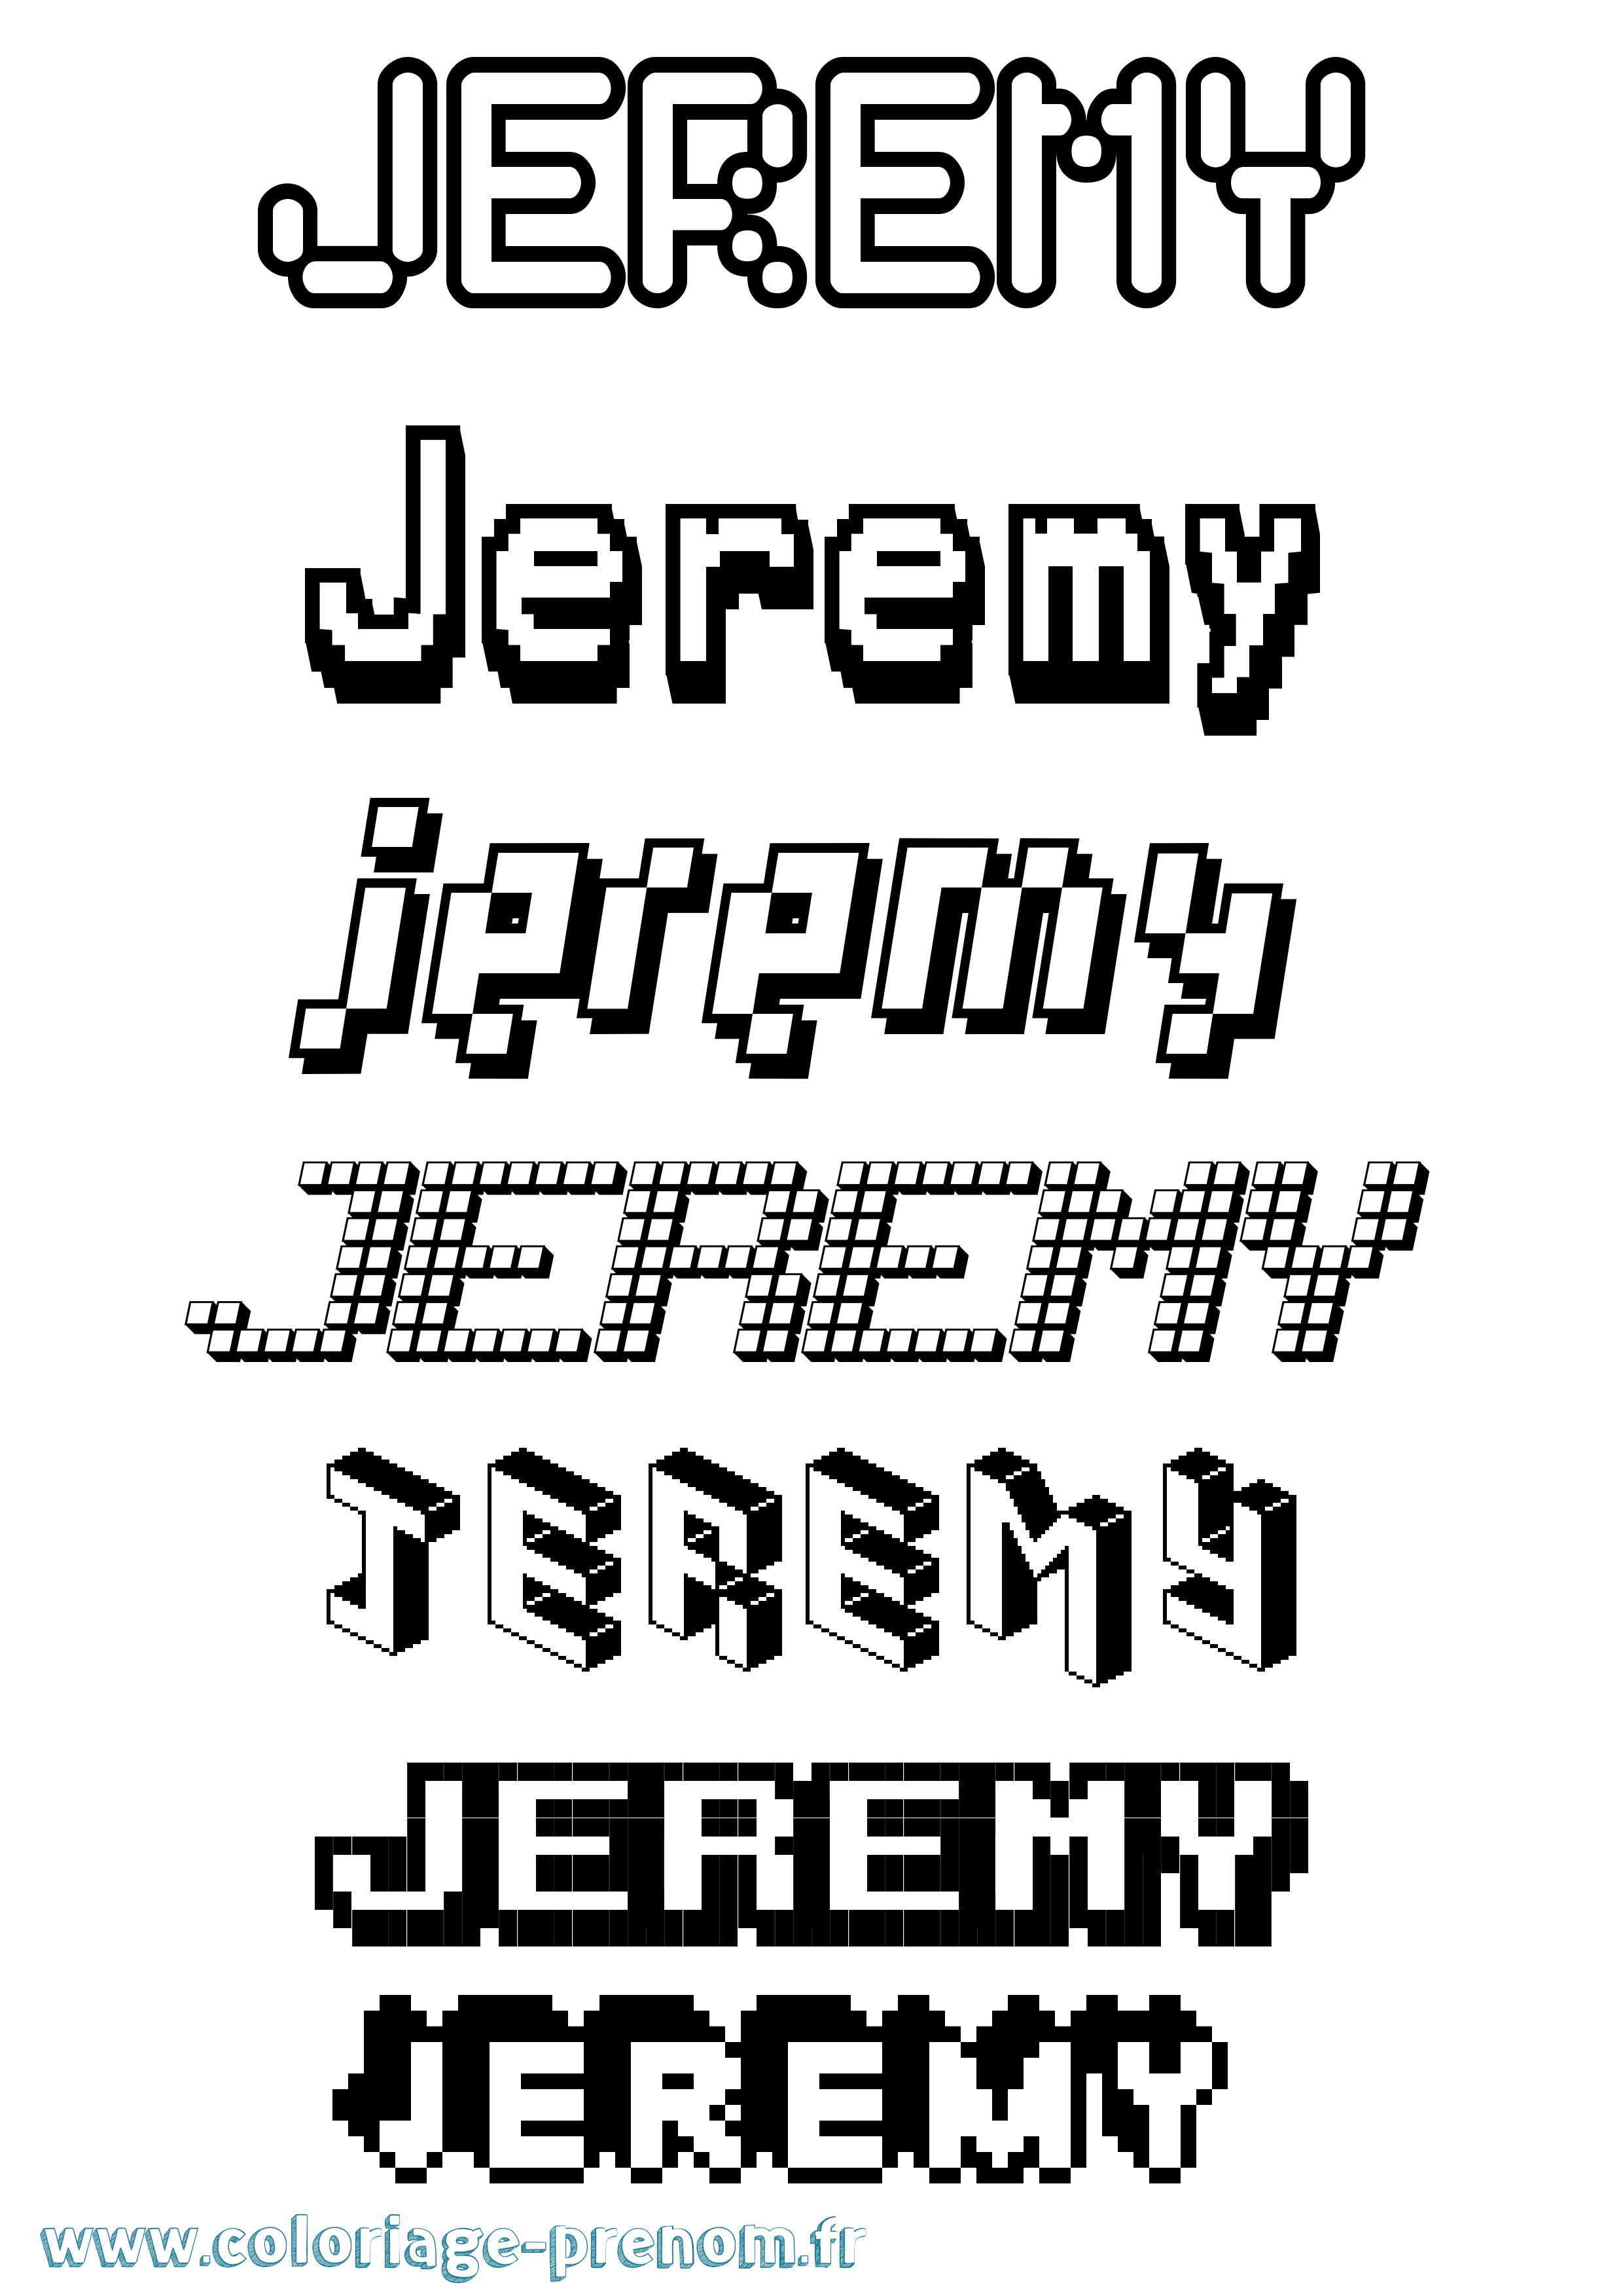 Coloriage prénom Jeremy Pixel